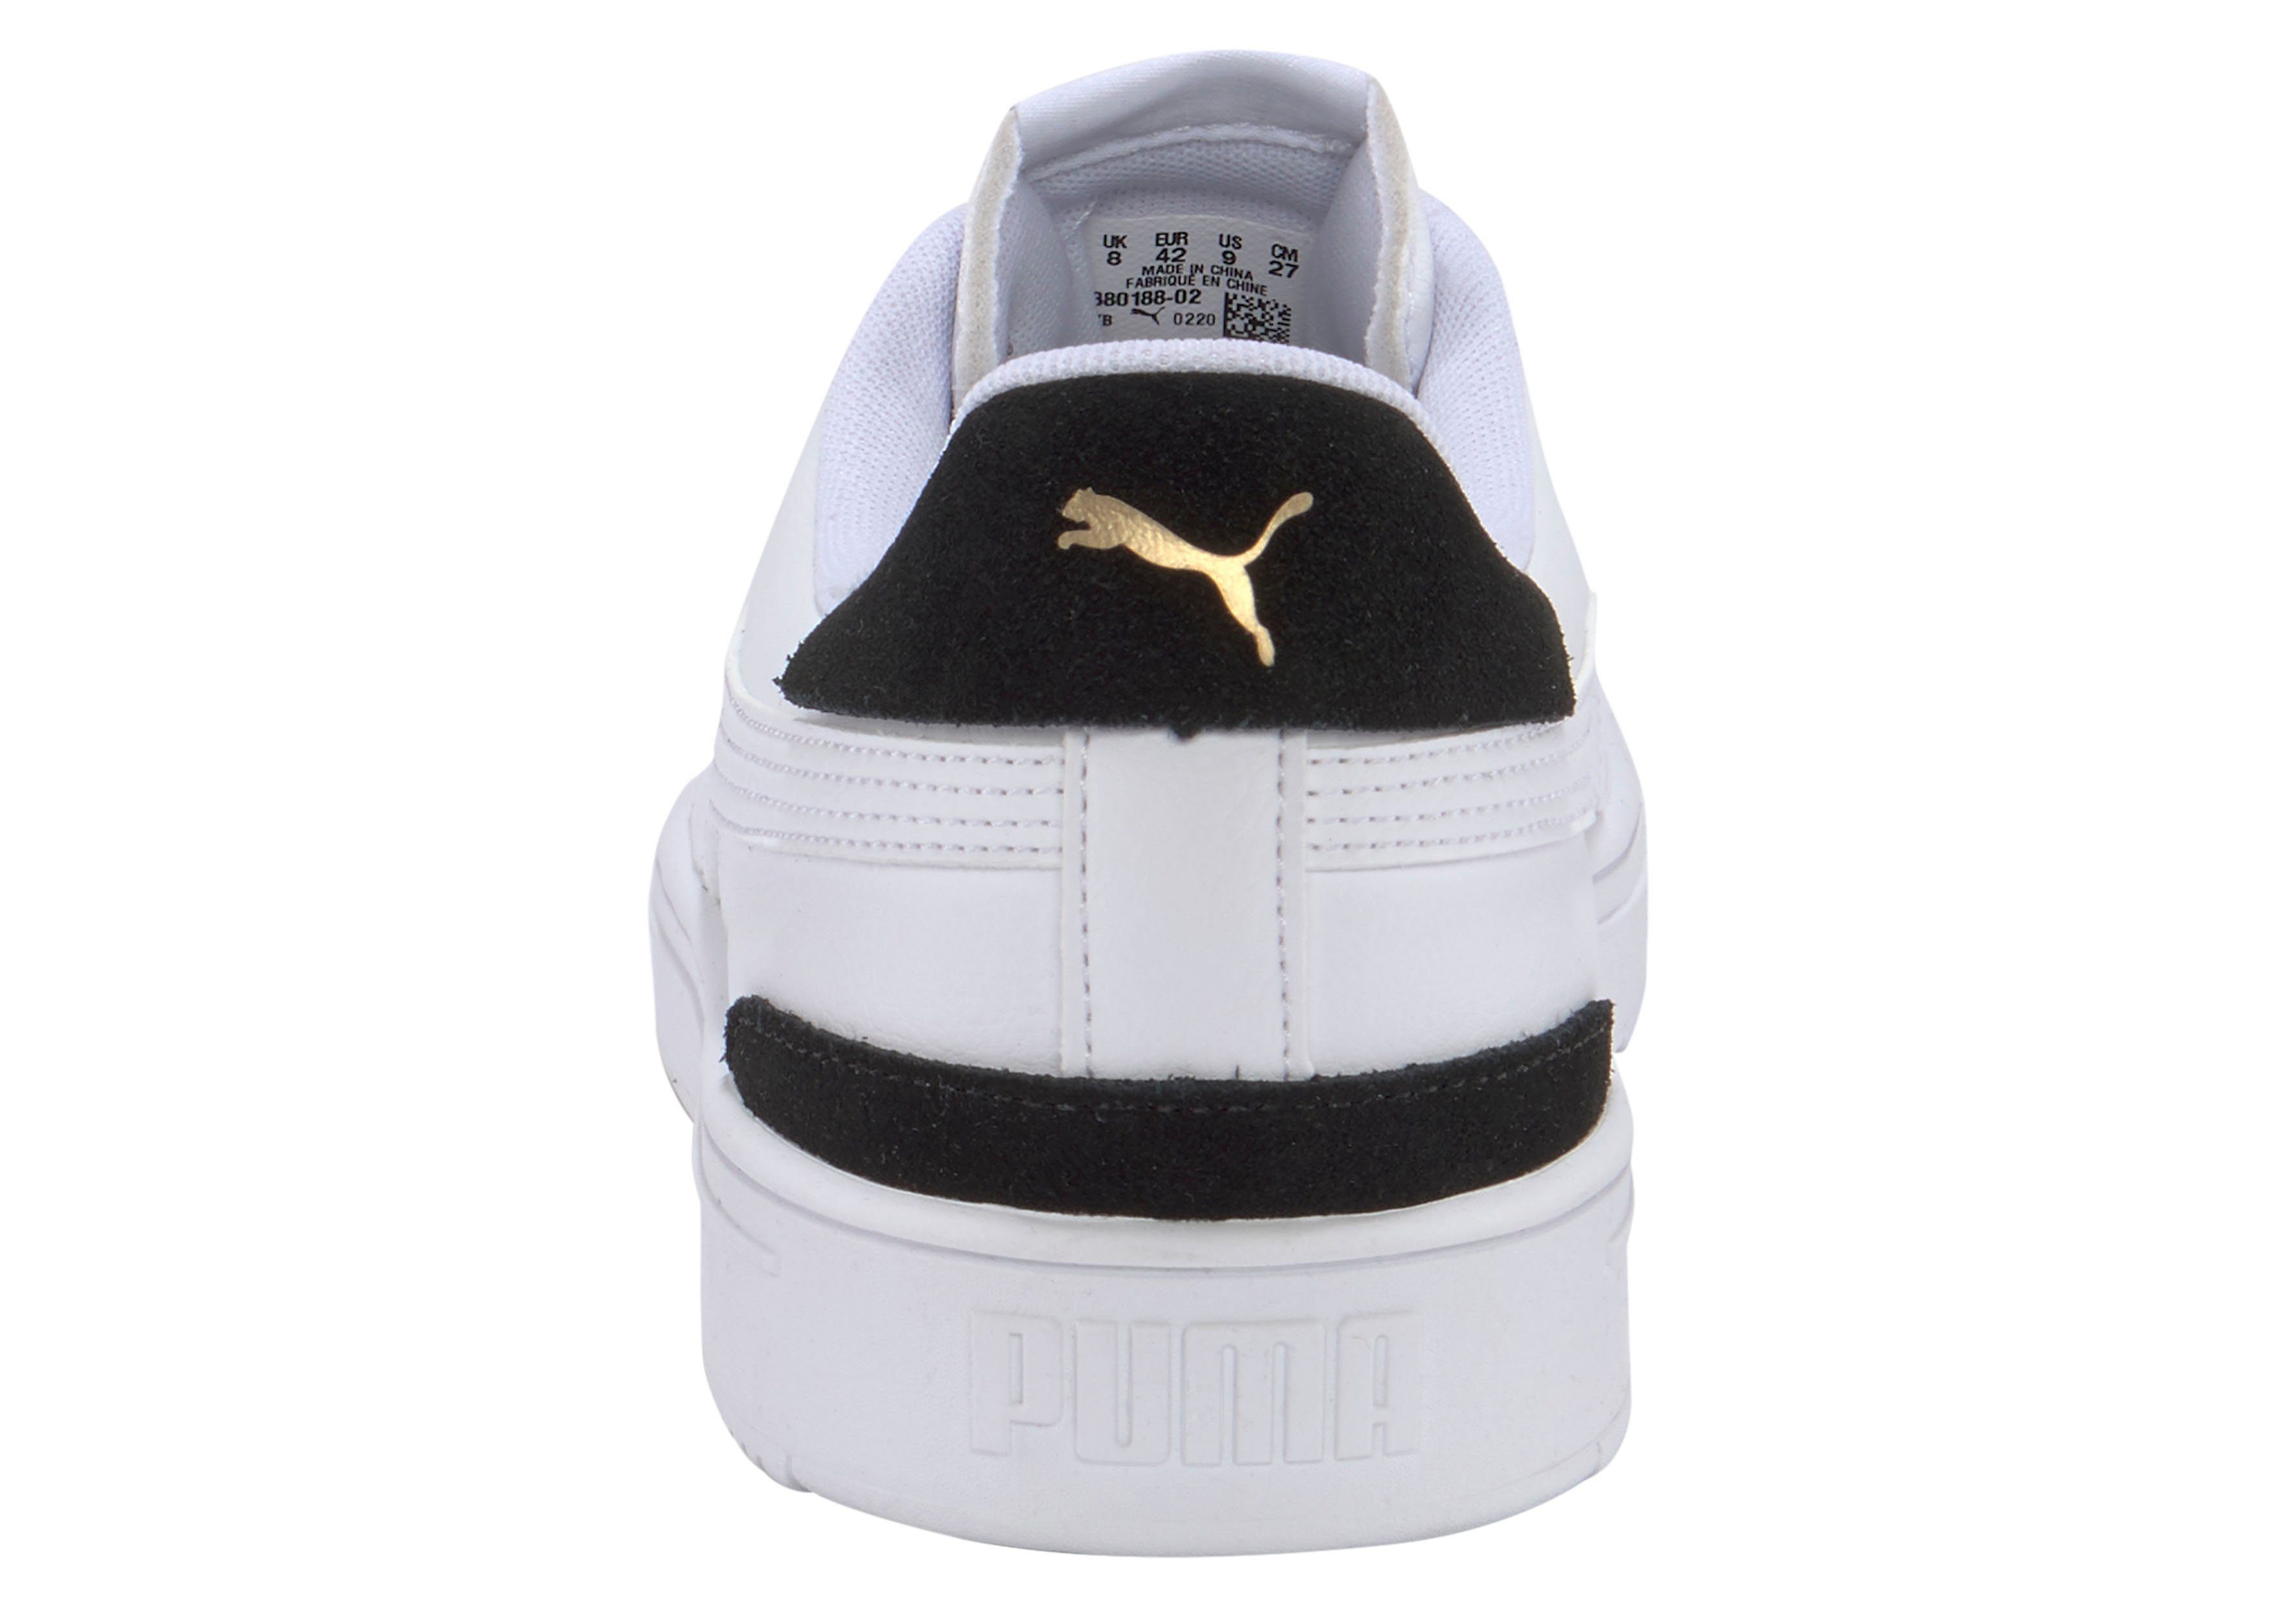 Puma Smash Sneaker Pro weiß-schwarz PUMA